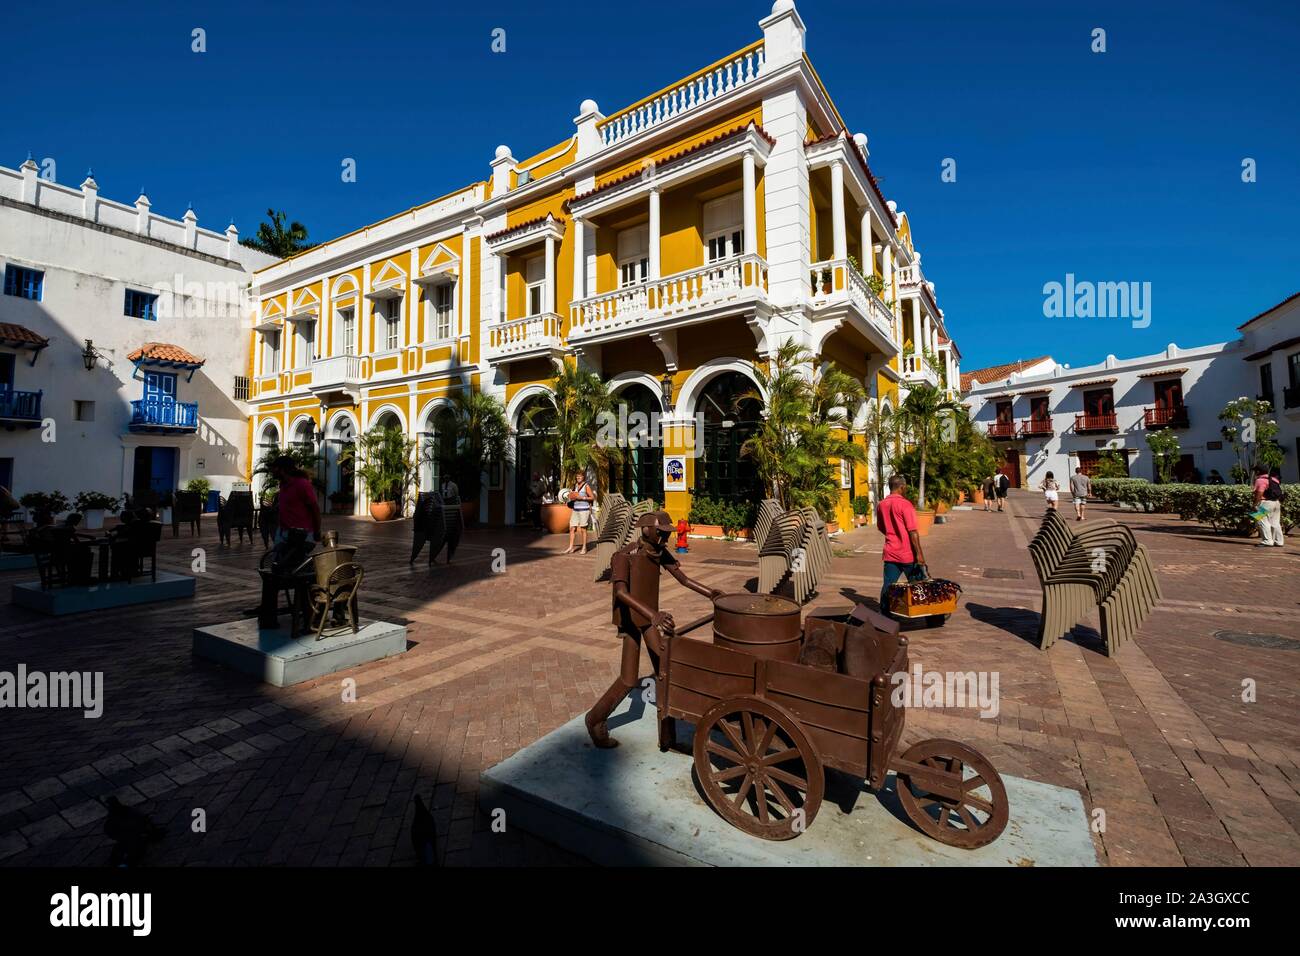 Kolumbien, Bolivar, Cartagena der Indies, kolonialen Zentrum registrierte Weltkulturerbe bu UNESCO, Plaza San Pedro Claver Stockfoto